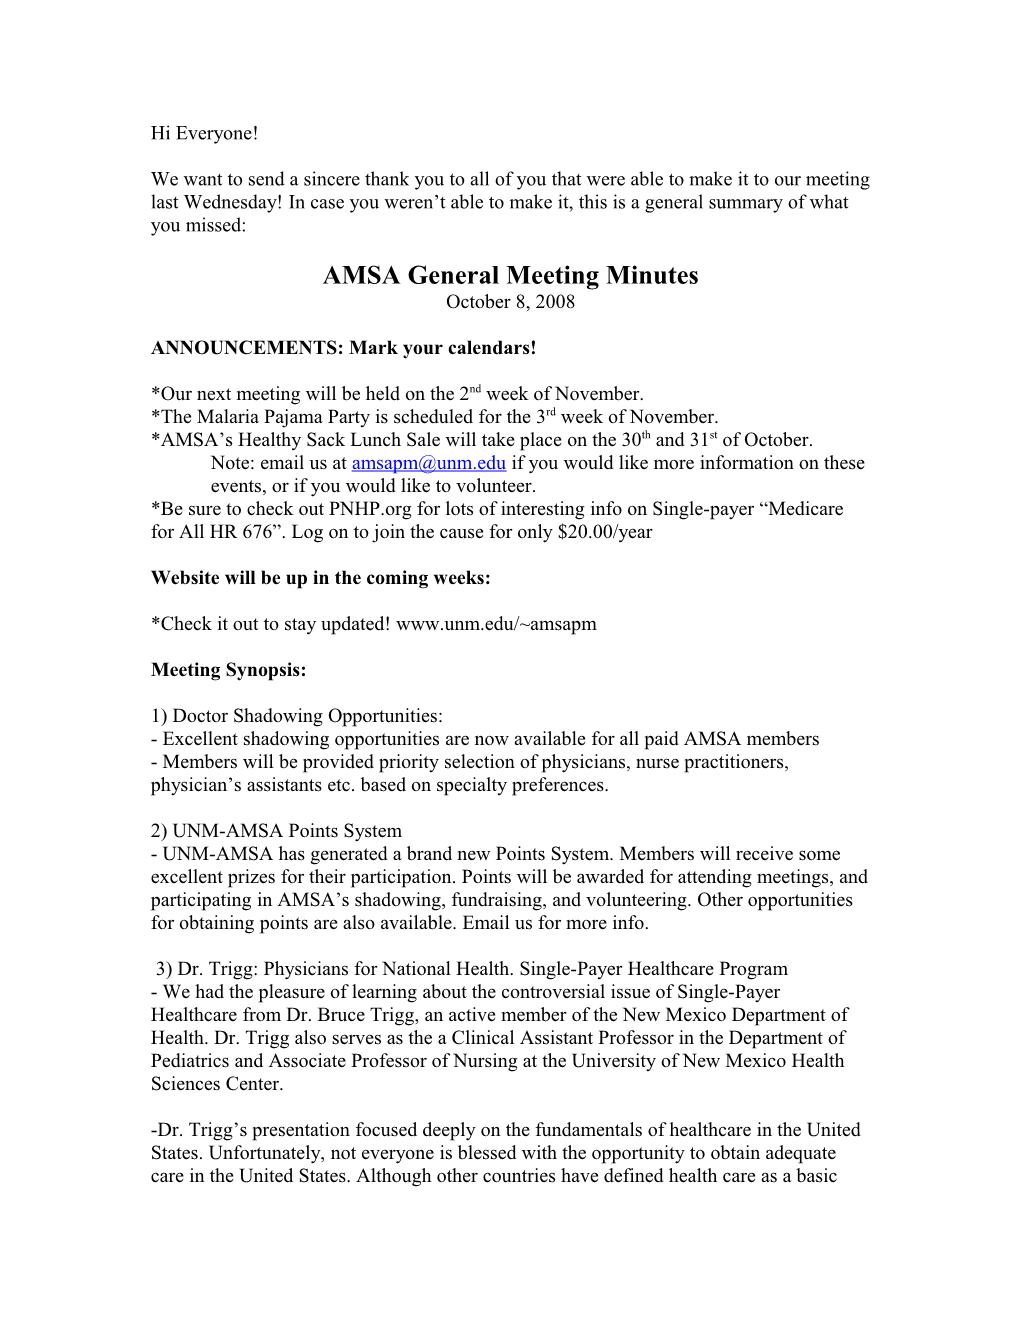 AMSA General Meeting Minutes